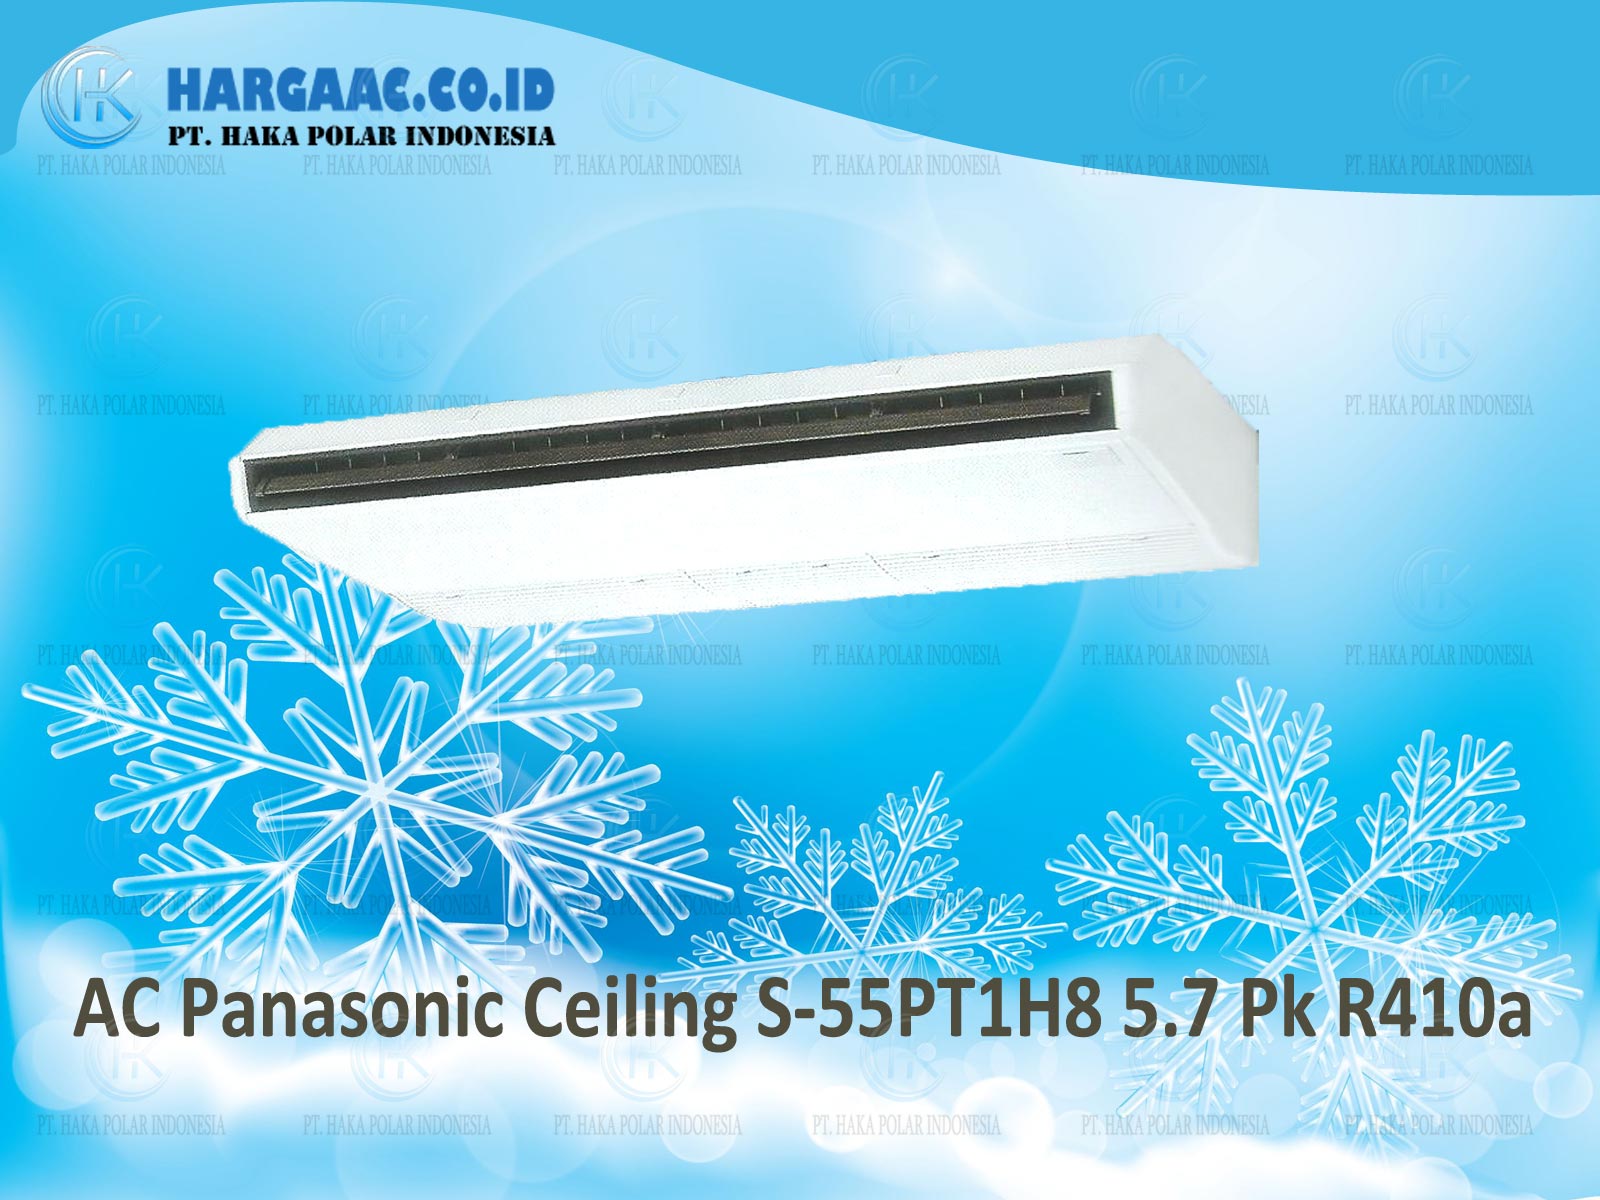 AC Panasonic Ceiling S-55PT1H8 3 Phase 5.7 PK R410a